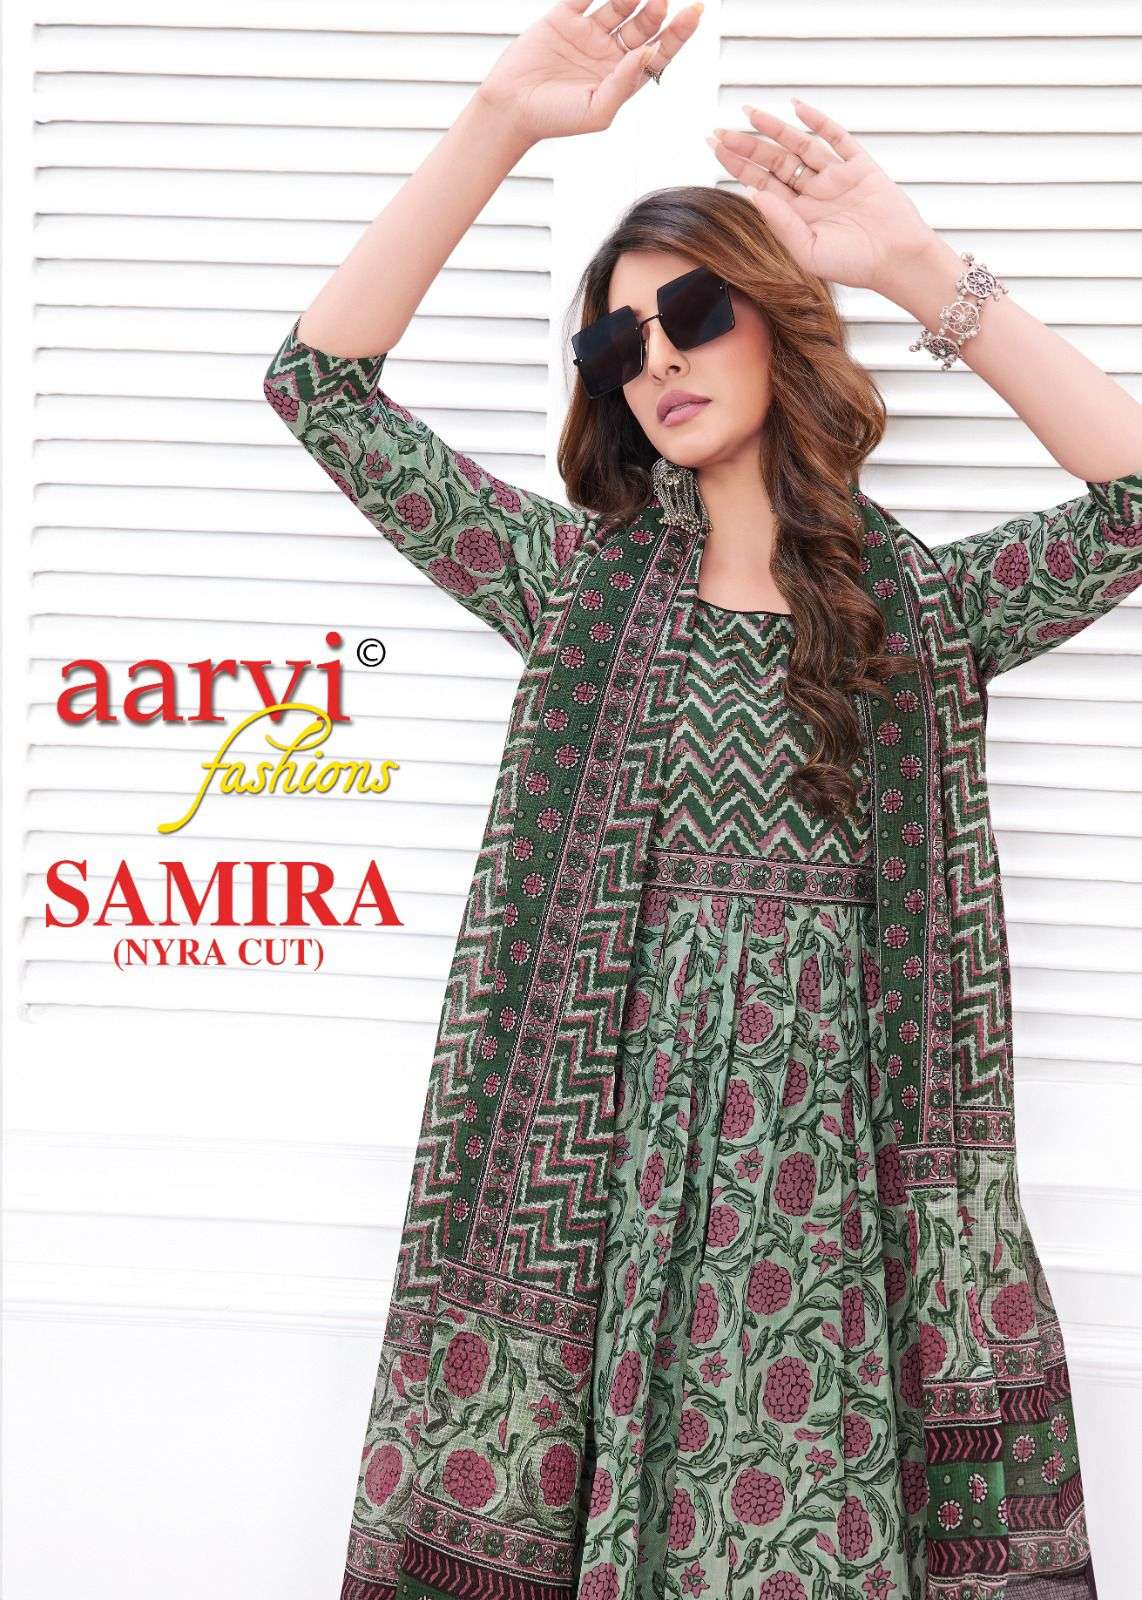 aarvi fashion launch samira readymade nayra cut salwar kameez 